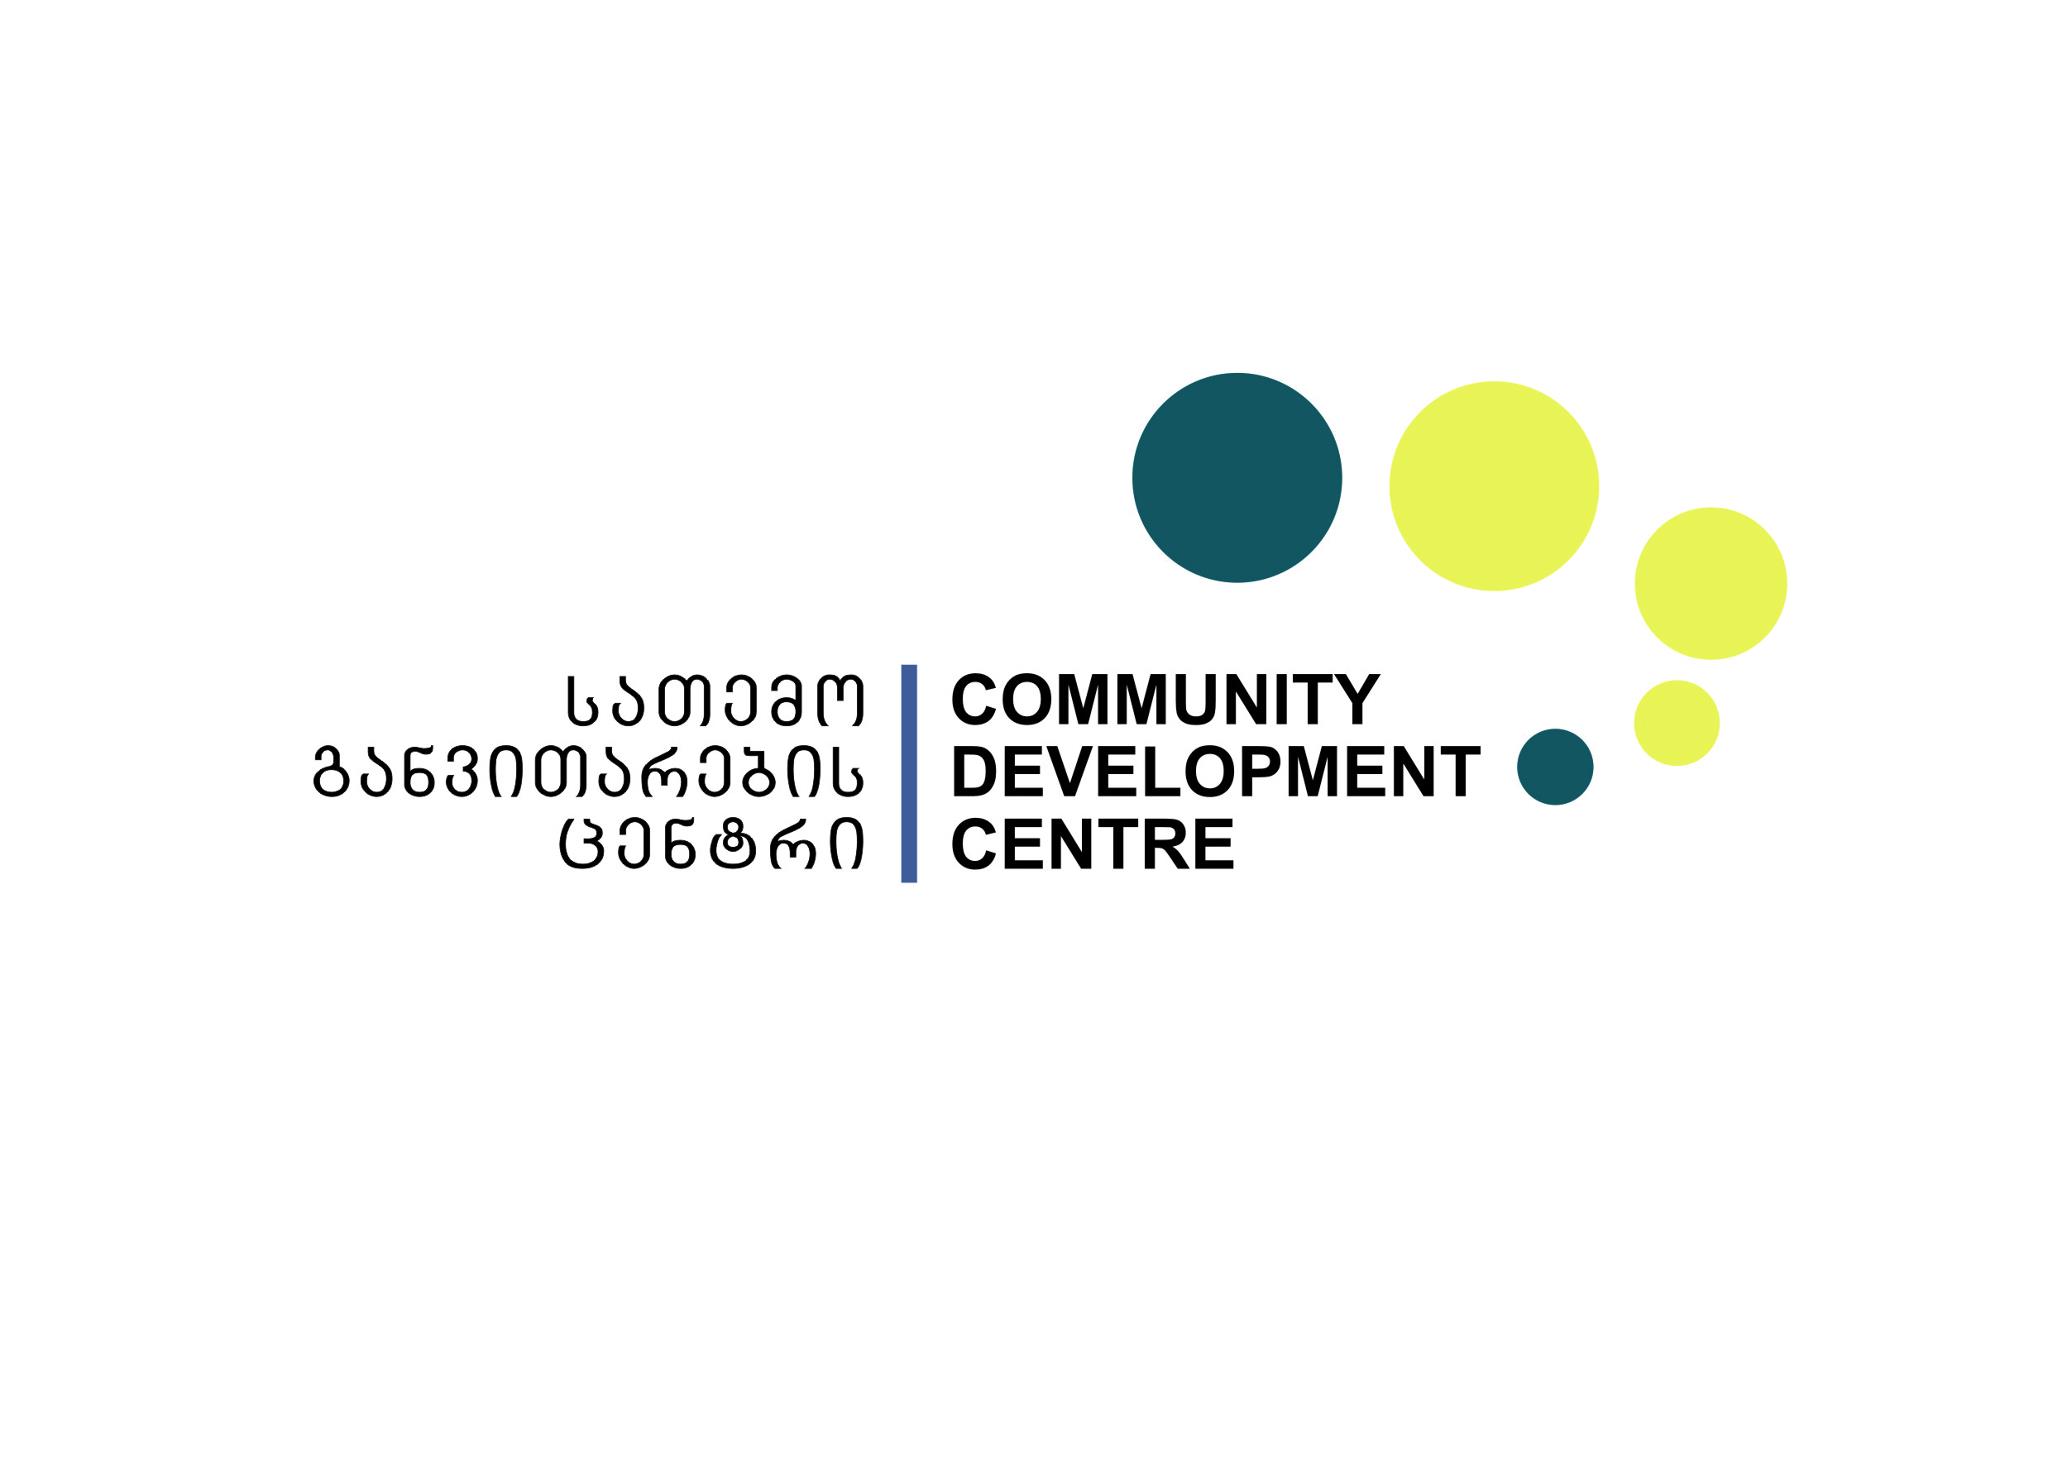 Community Development Centre